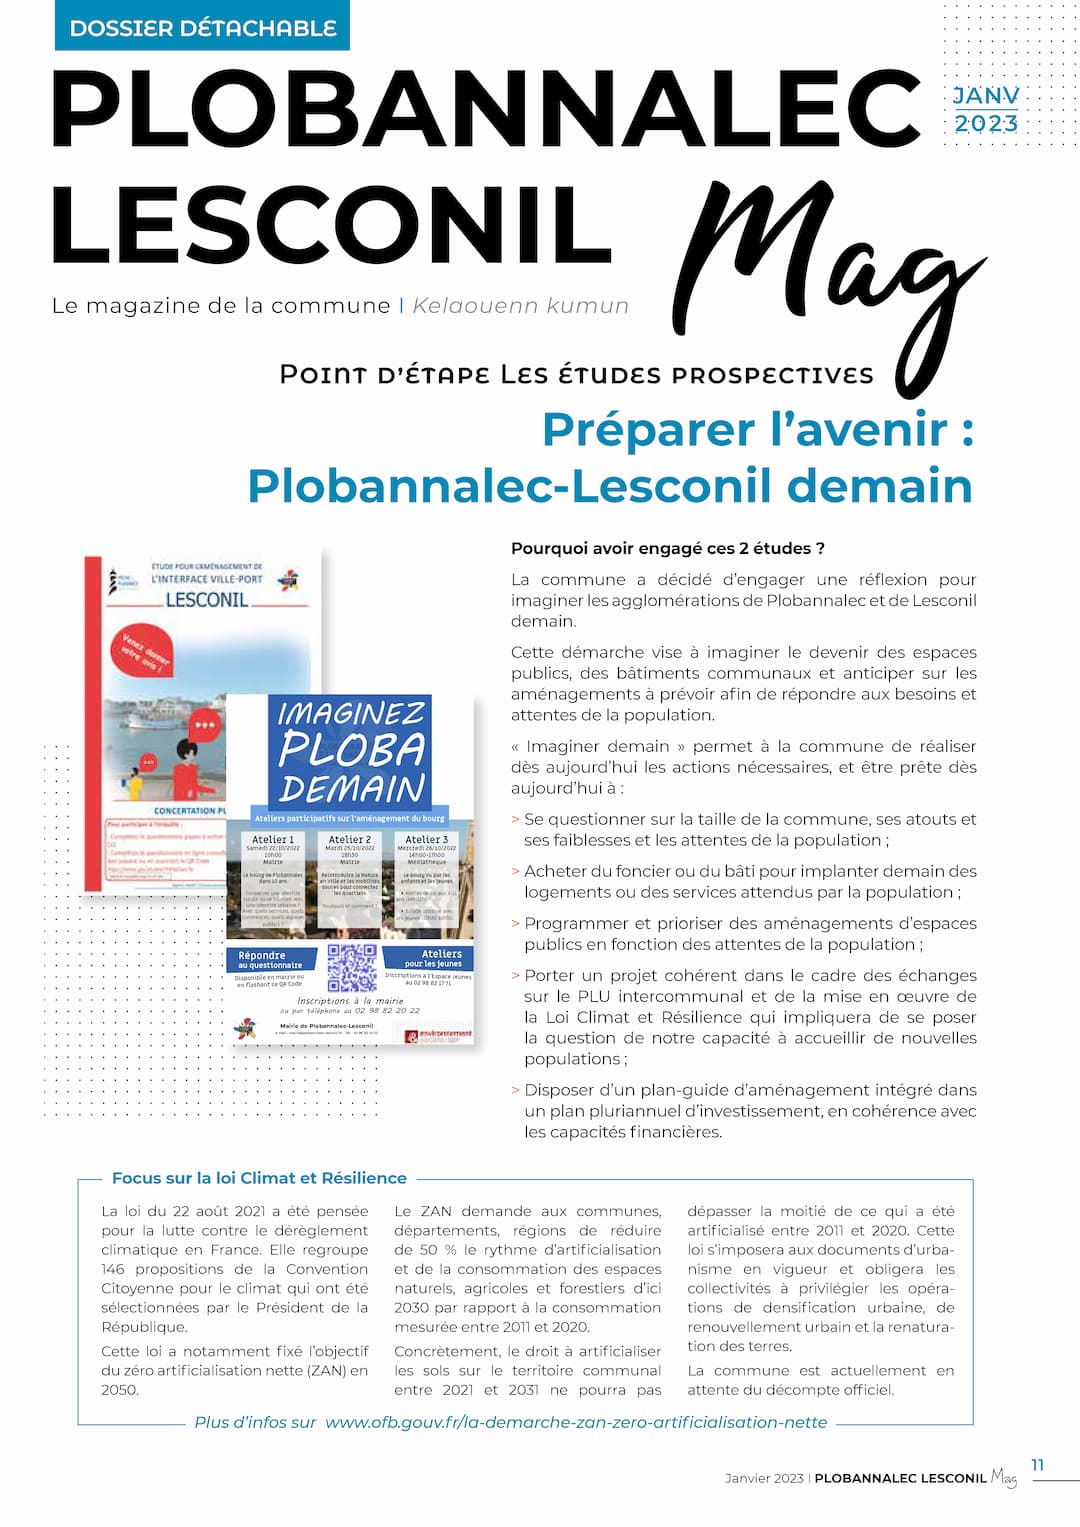 Le Mag – Dossier Plobannalec-Lesconil demain